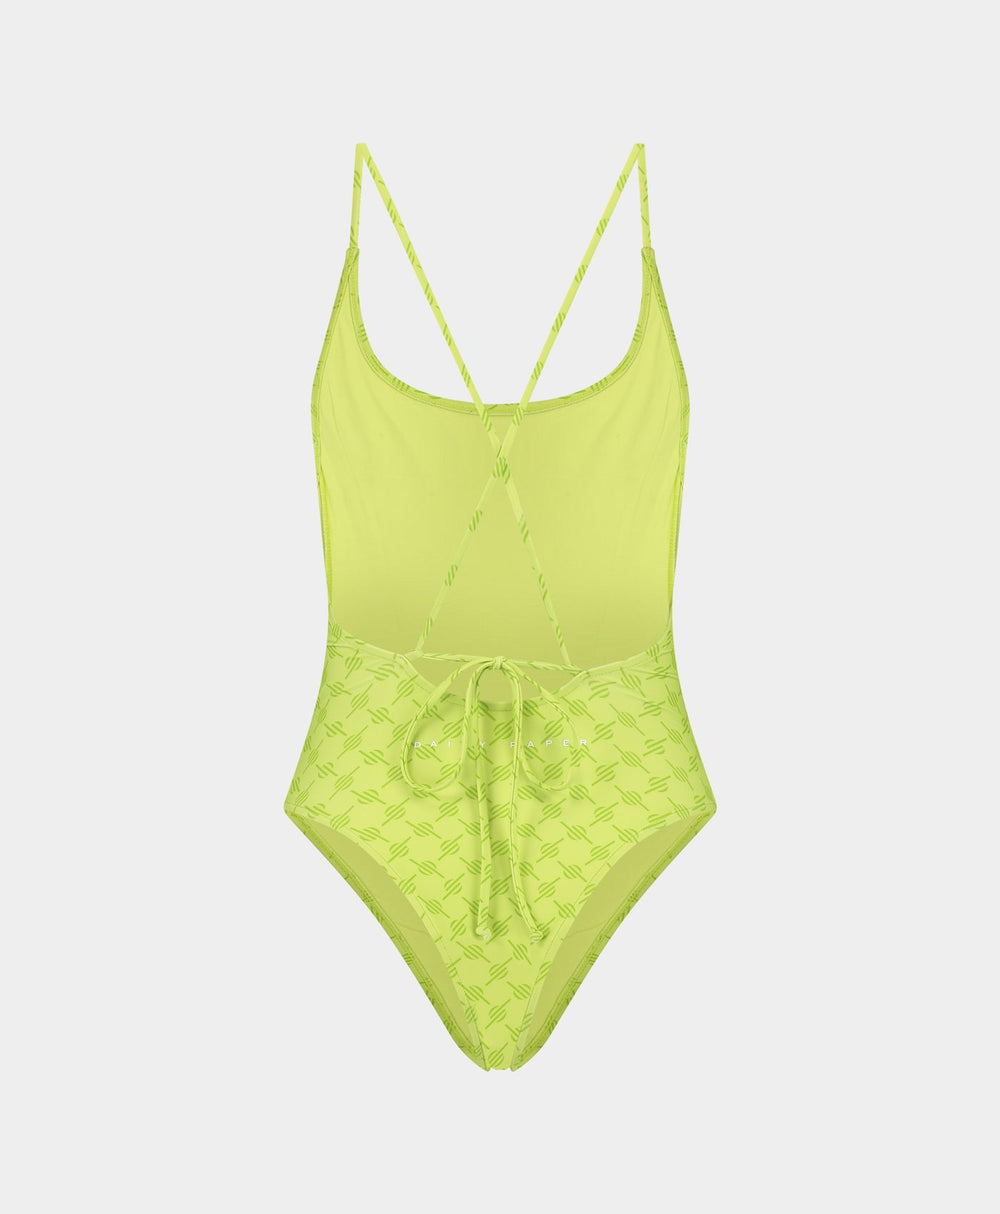 DP - Daiquiri Green Reya Monogram Swimsuit - Packshot - Rear